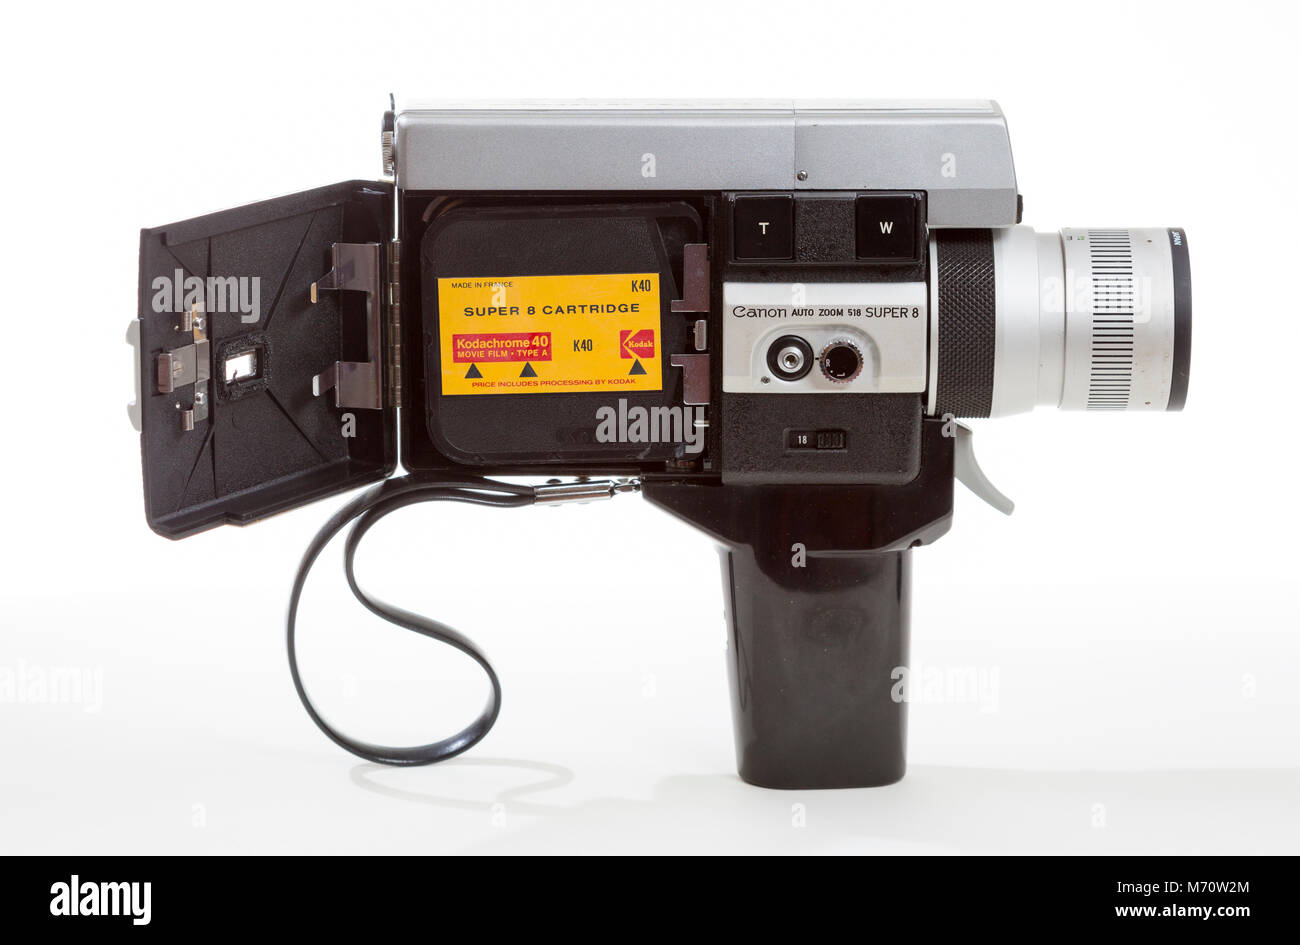 Super 8mm e imágenes de alta resolución - Alamy